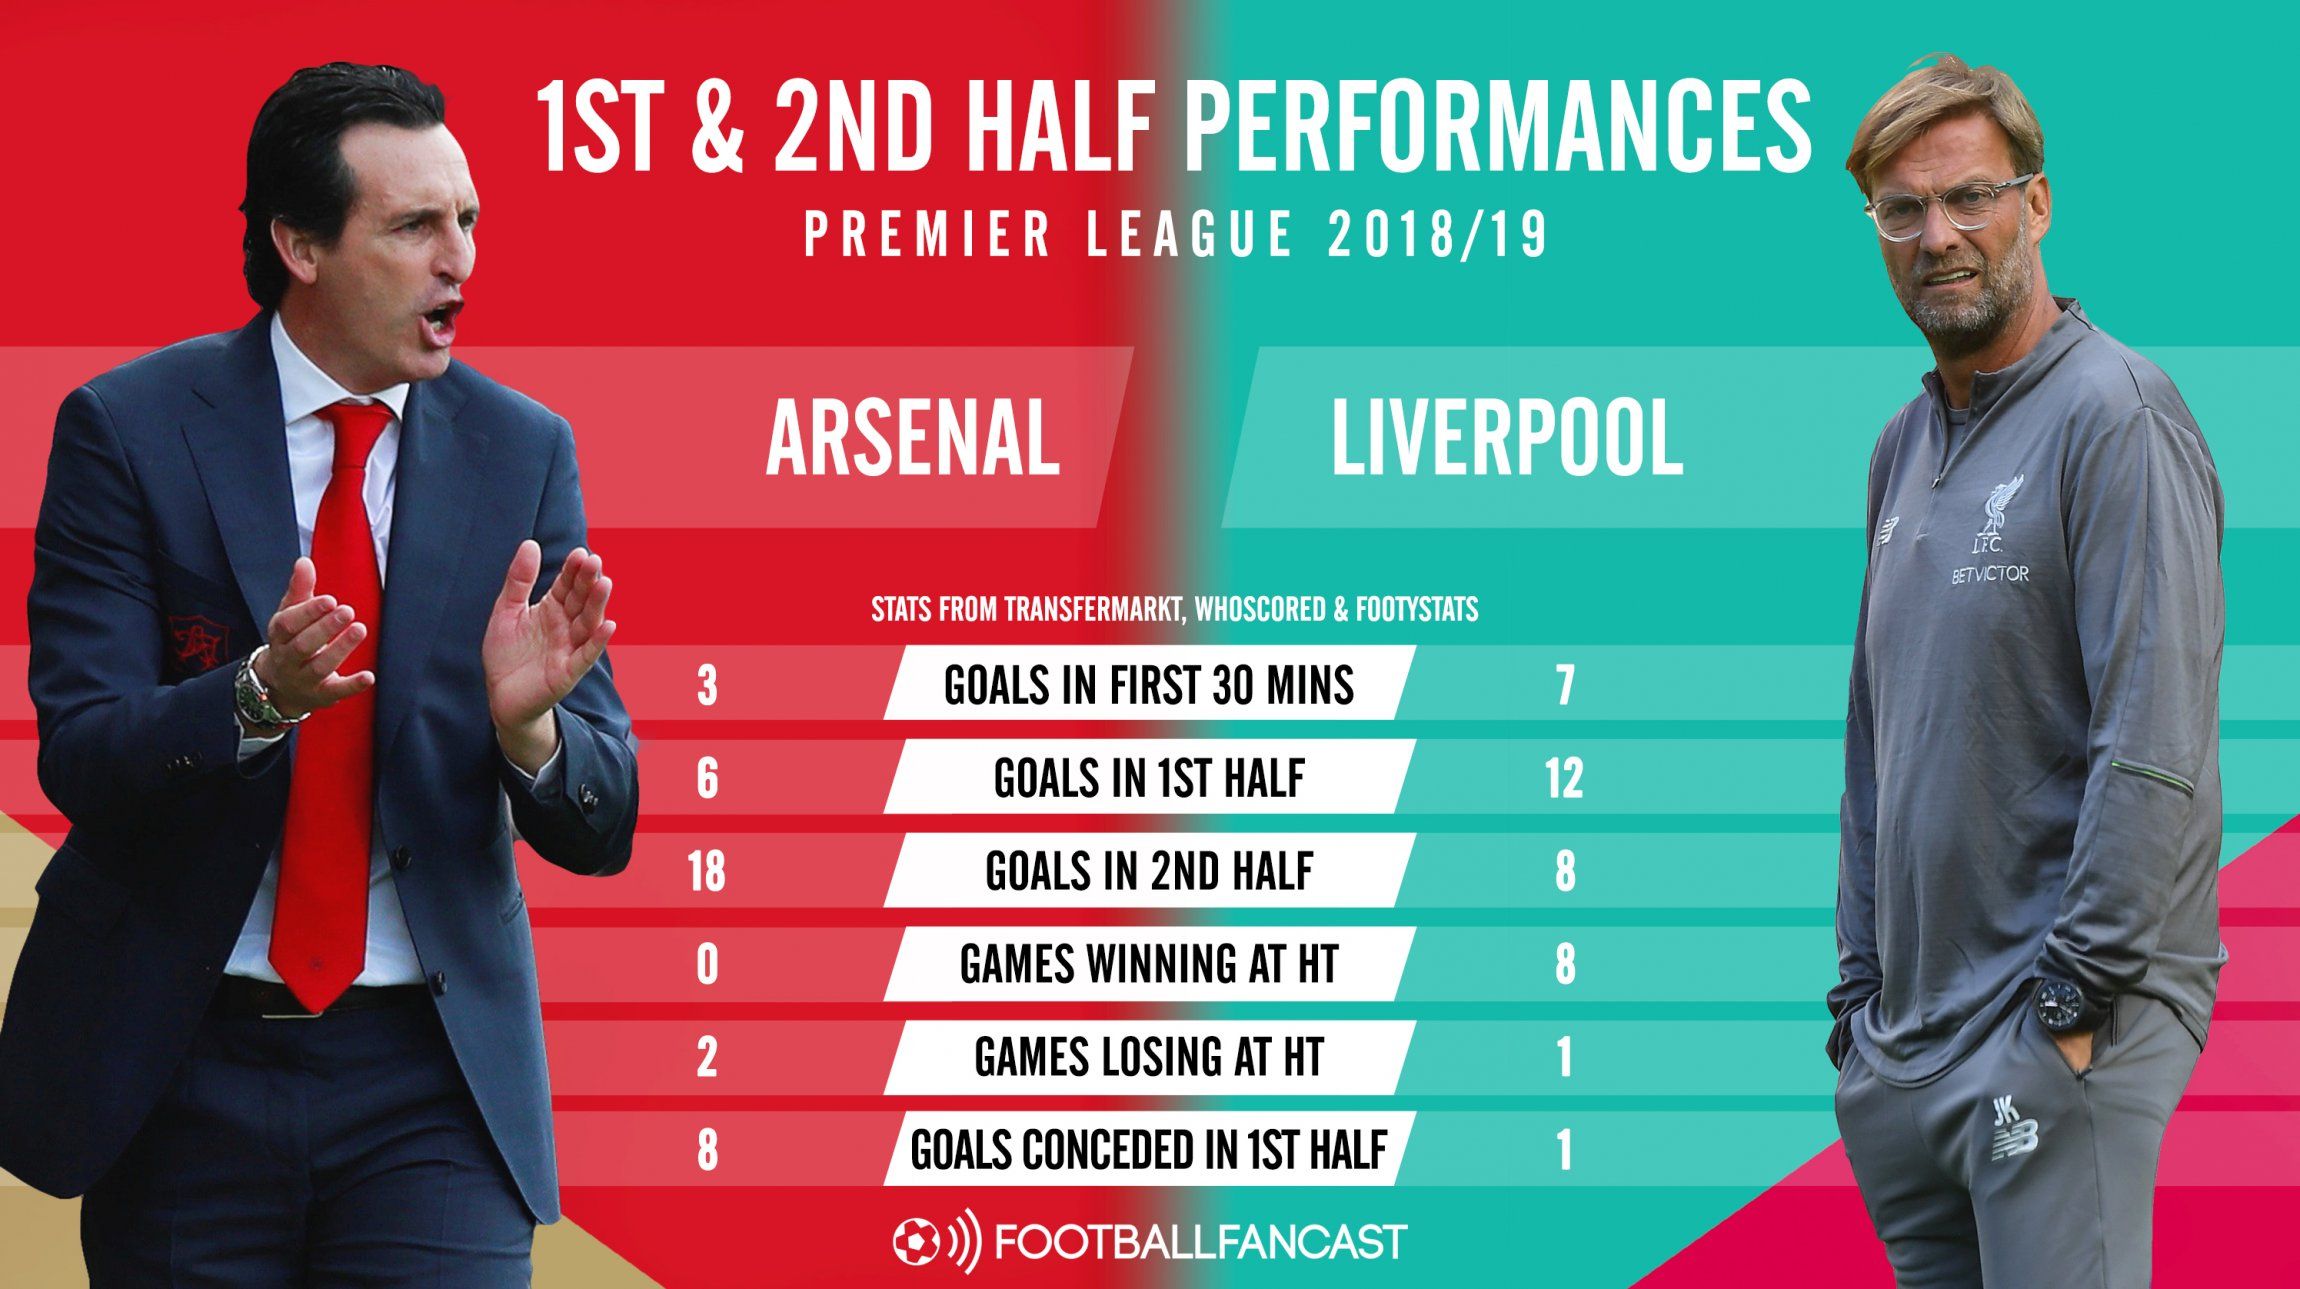 Arsenal v Liverpool - first half vs second half